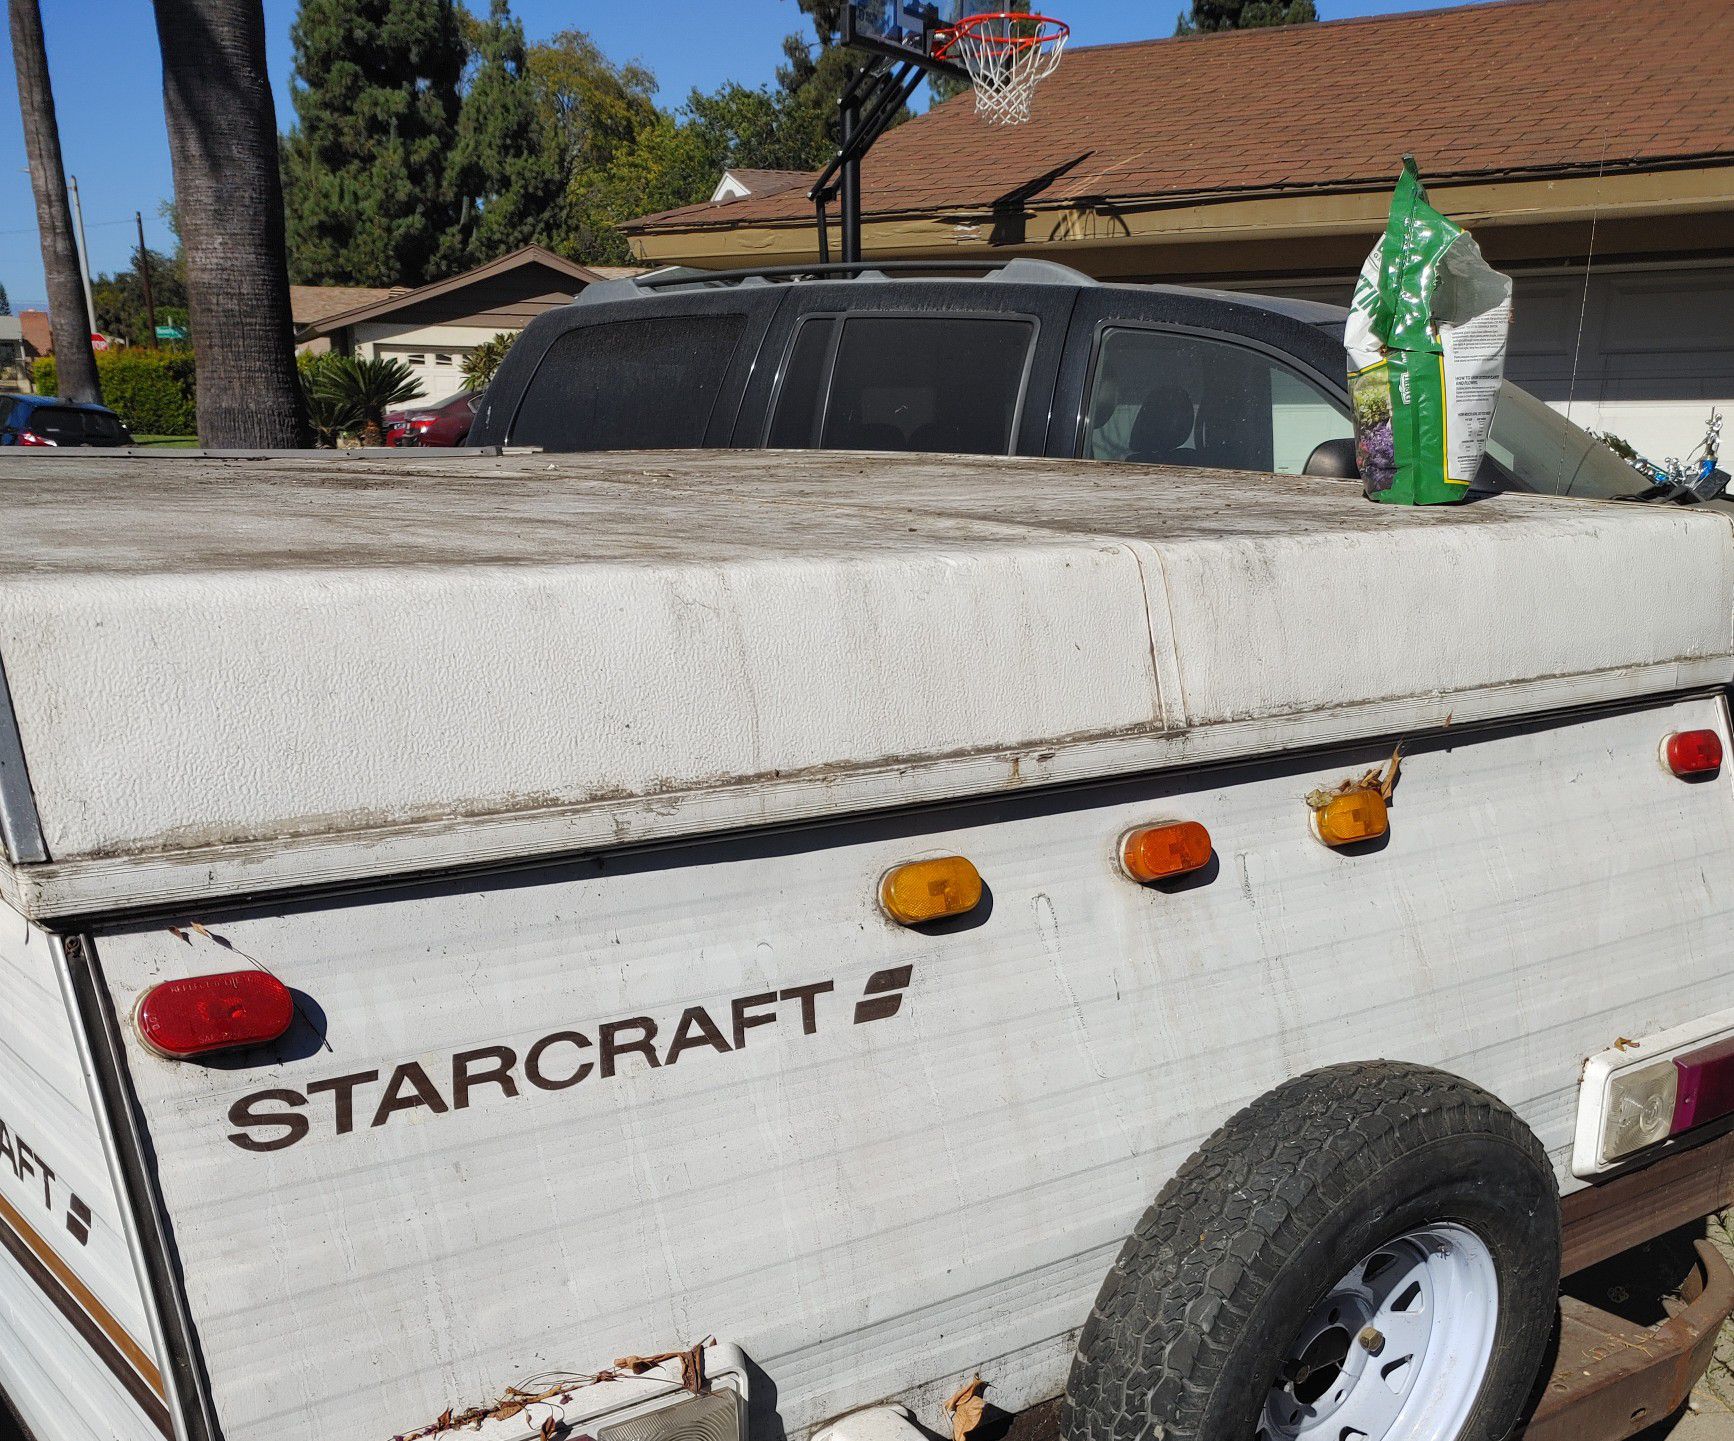 Starcraft pop up trailer camper